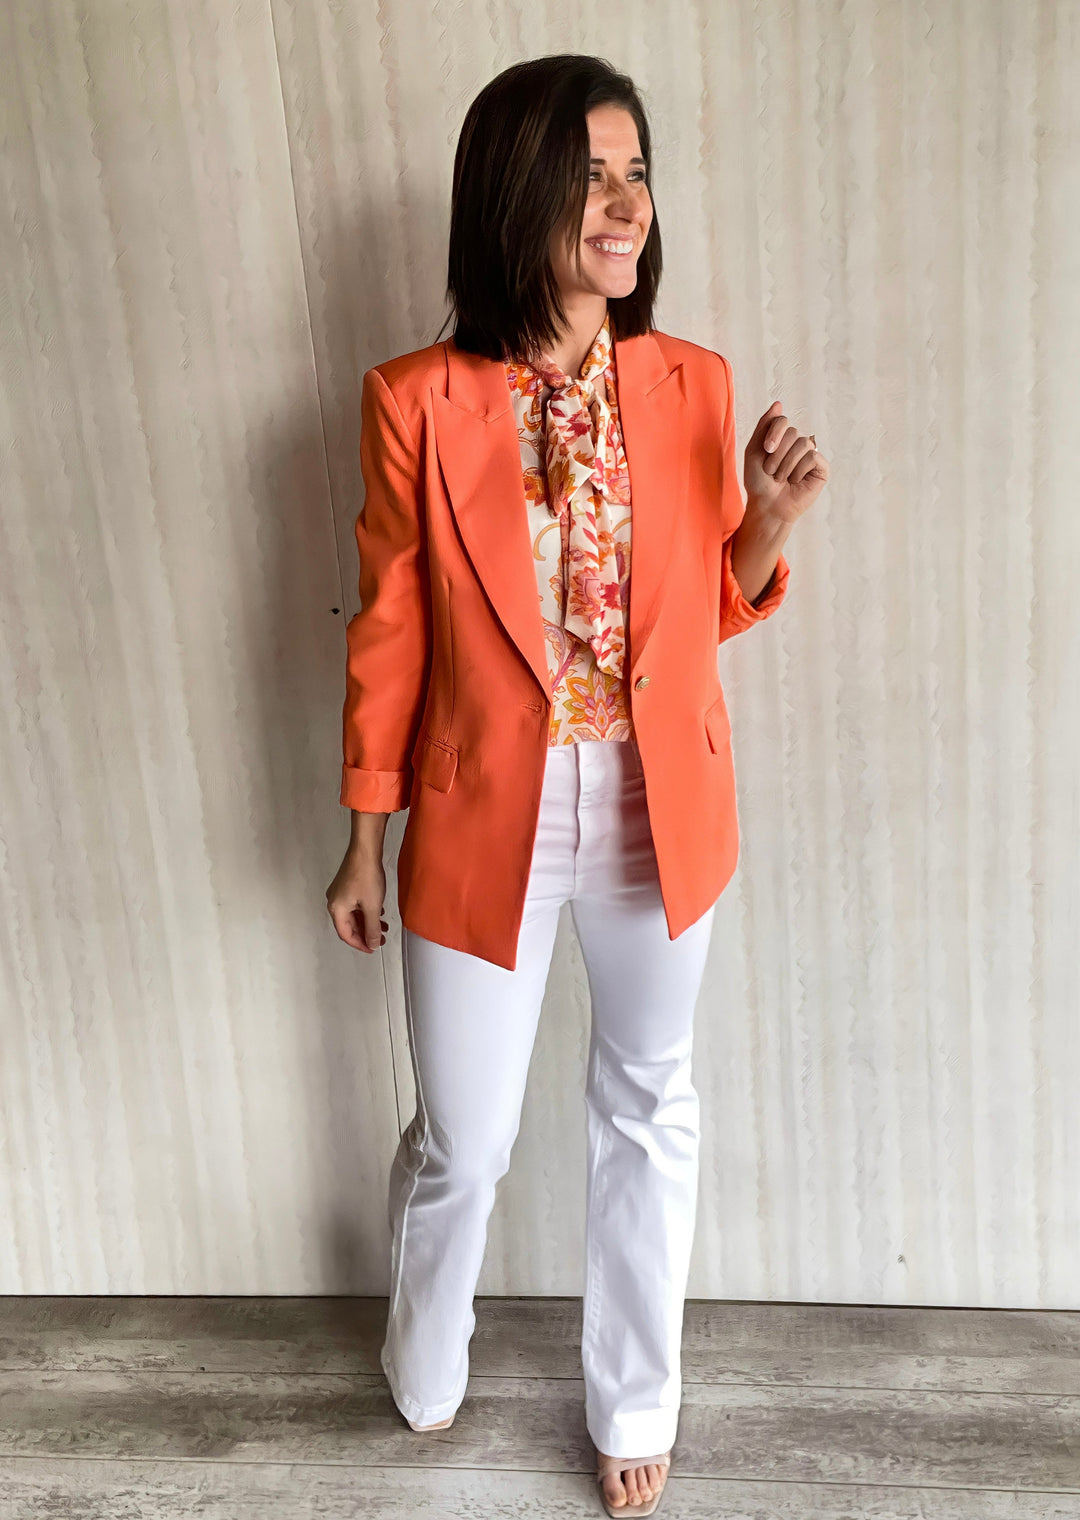 Women's Light Orange Blazer with dress blouse and white flare pants.